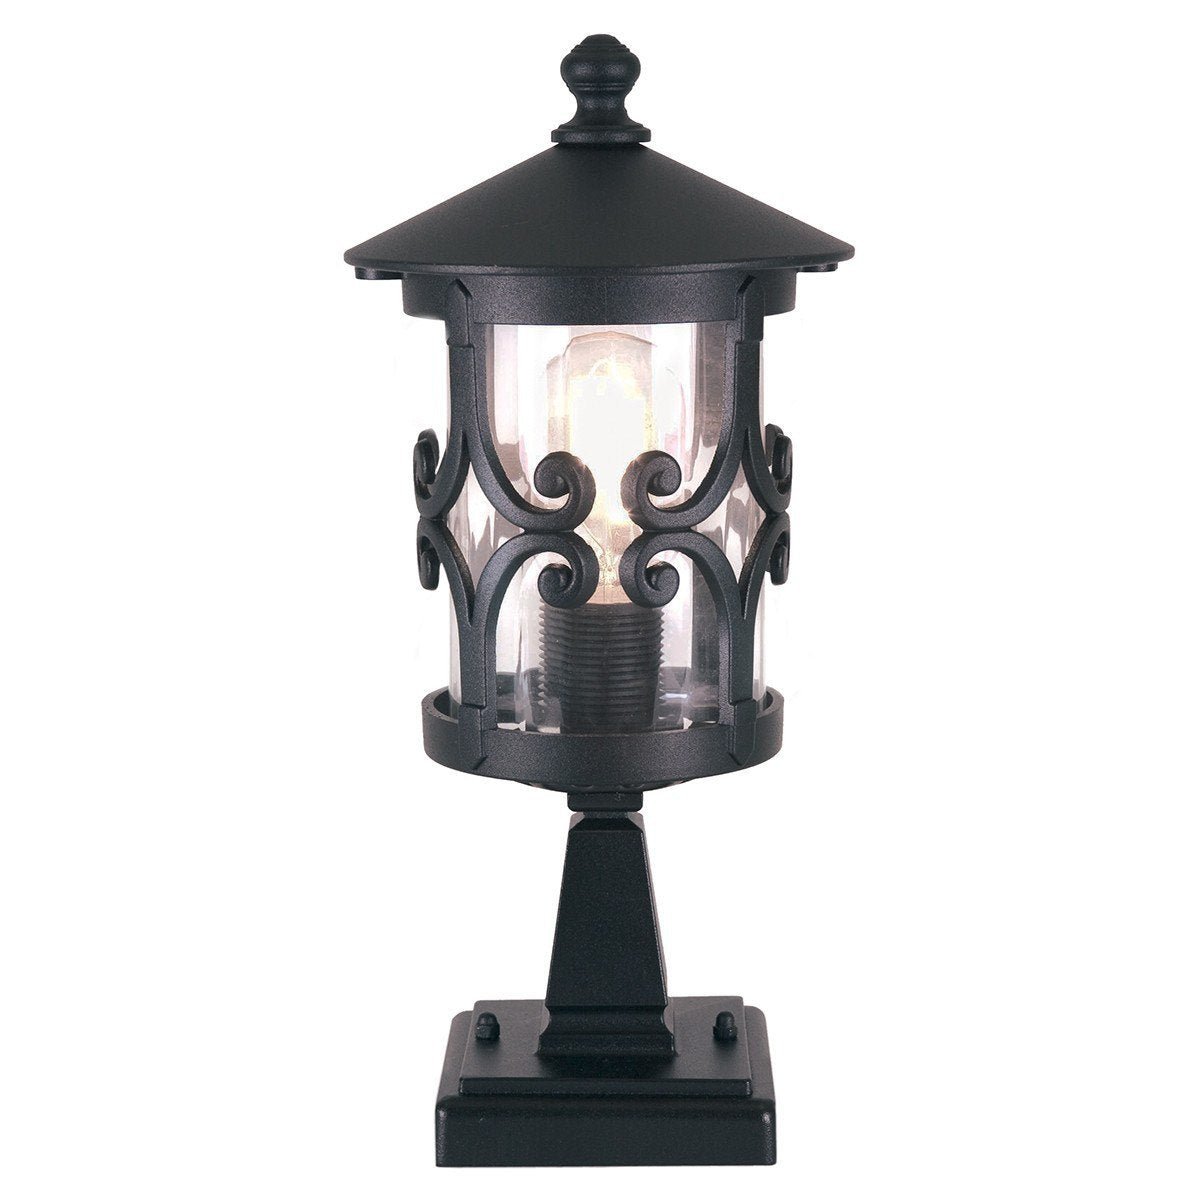 Hereford Pedestal Lantern Black - London Lighting - 1